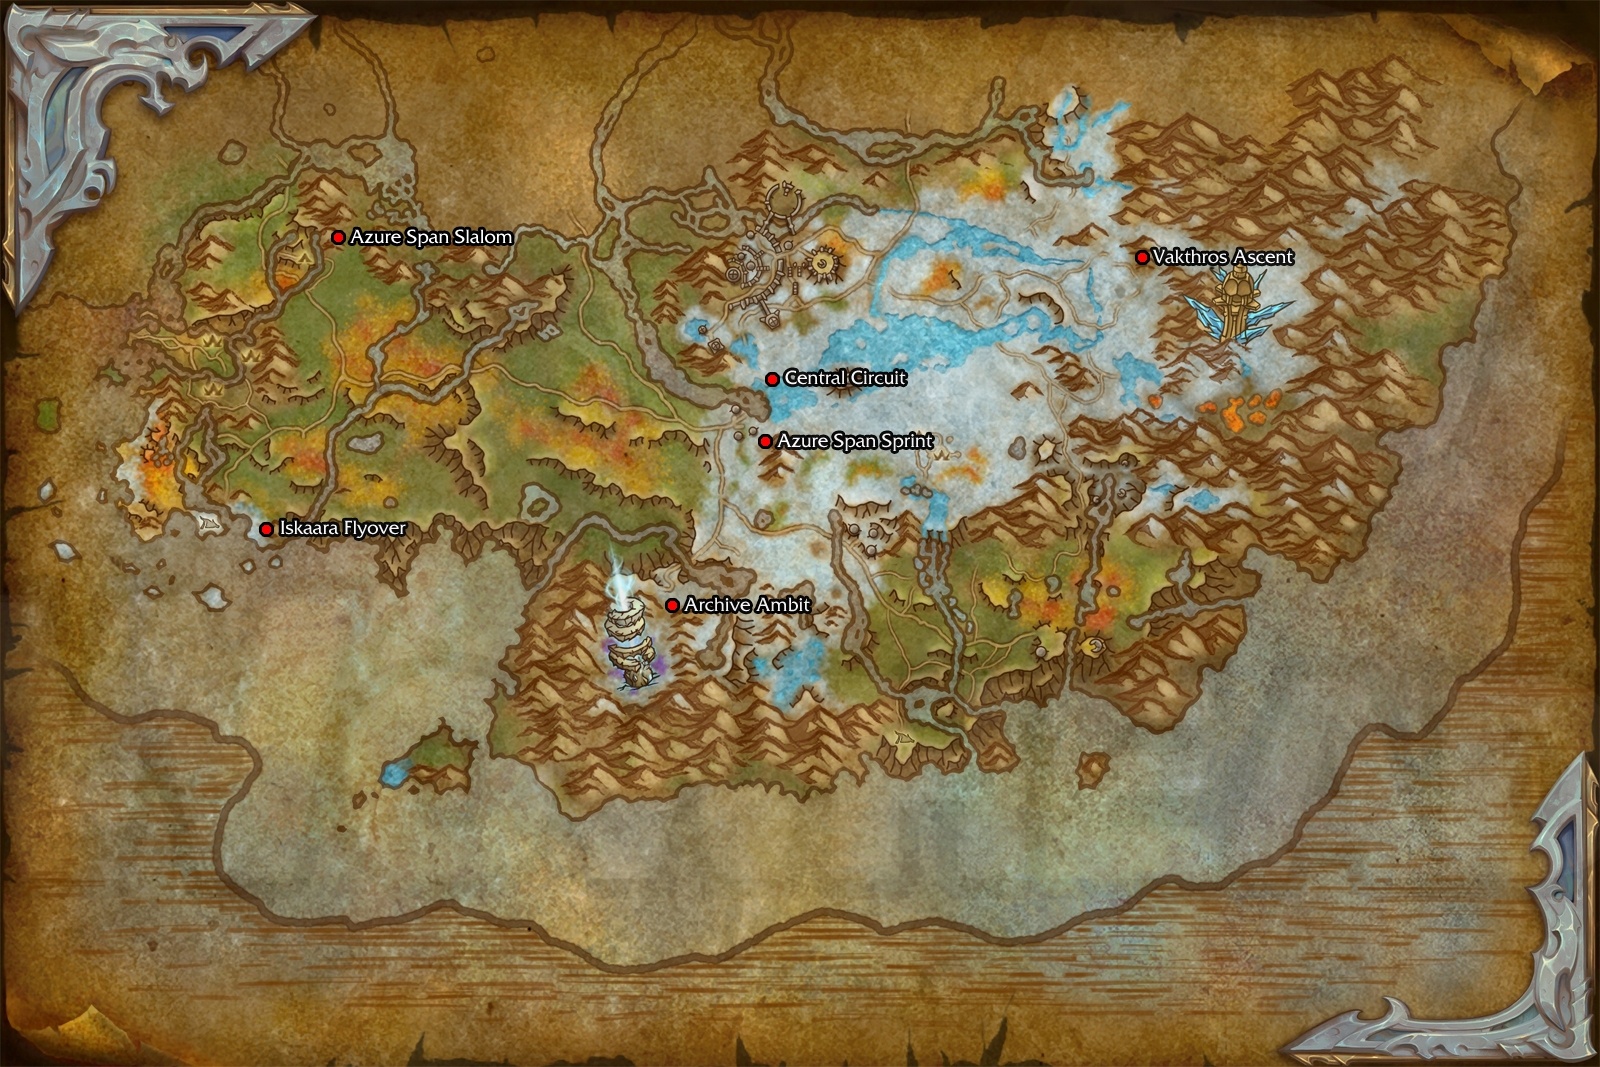 Thaldraszus Dragonriding Races (10.0.2) - World of Warcraft - Icy Veins